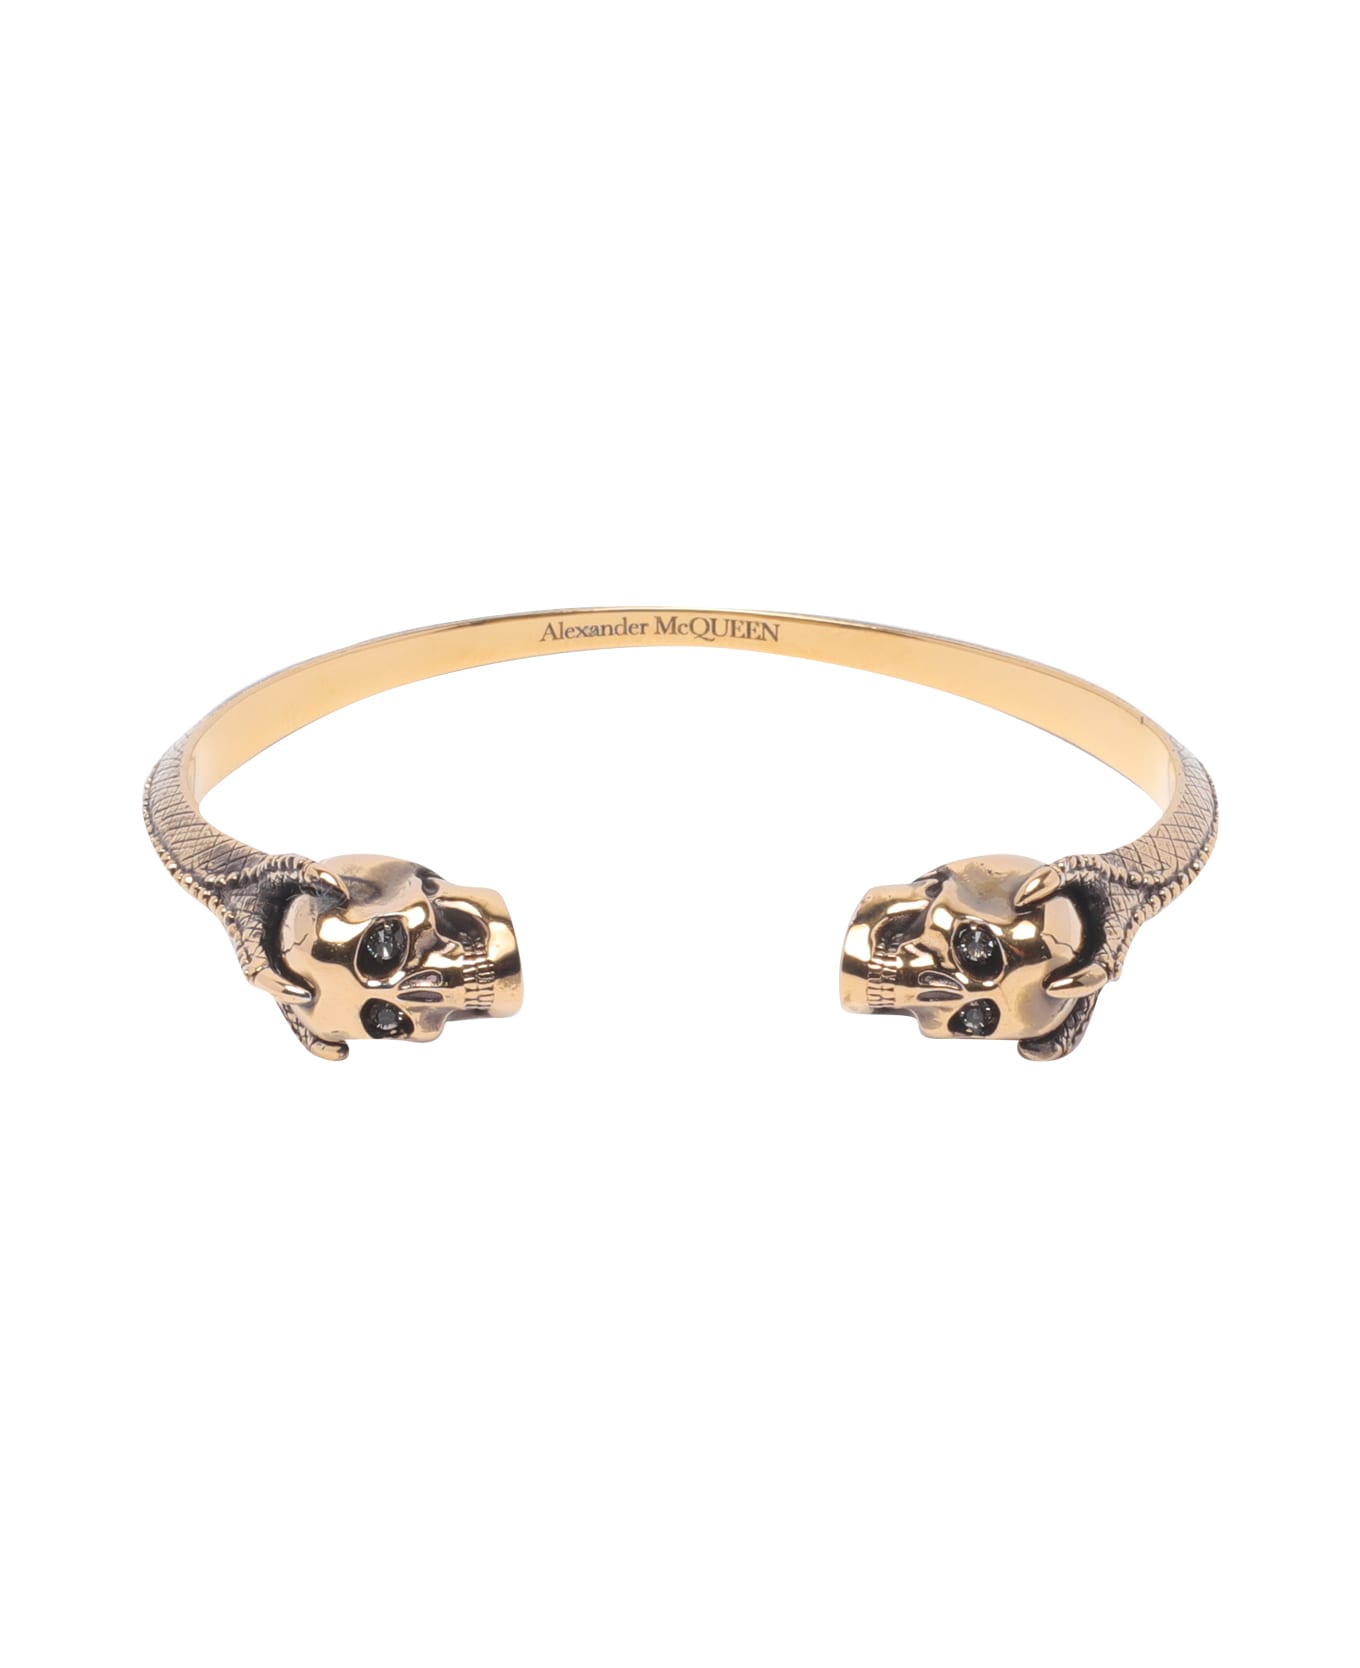 Alexander McQueen Skull Bracelet - Golden